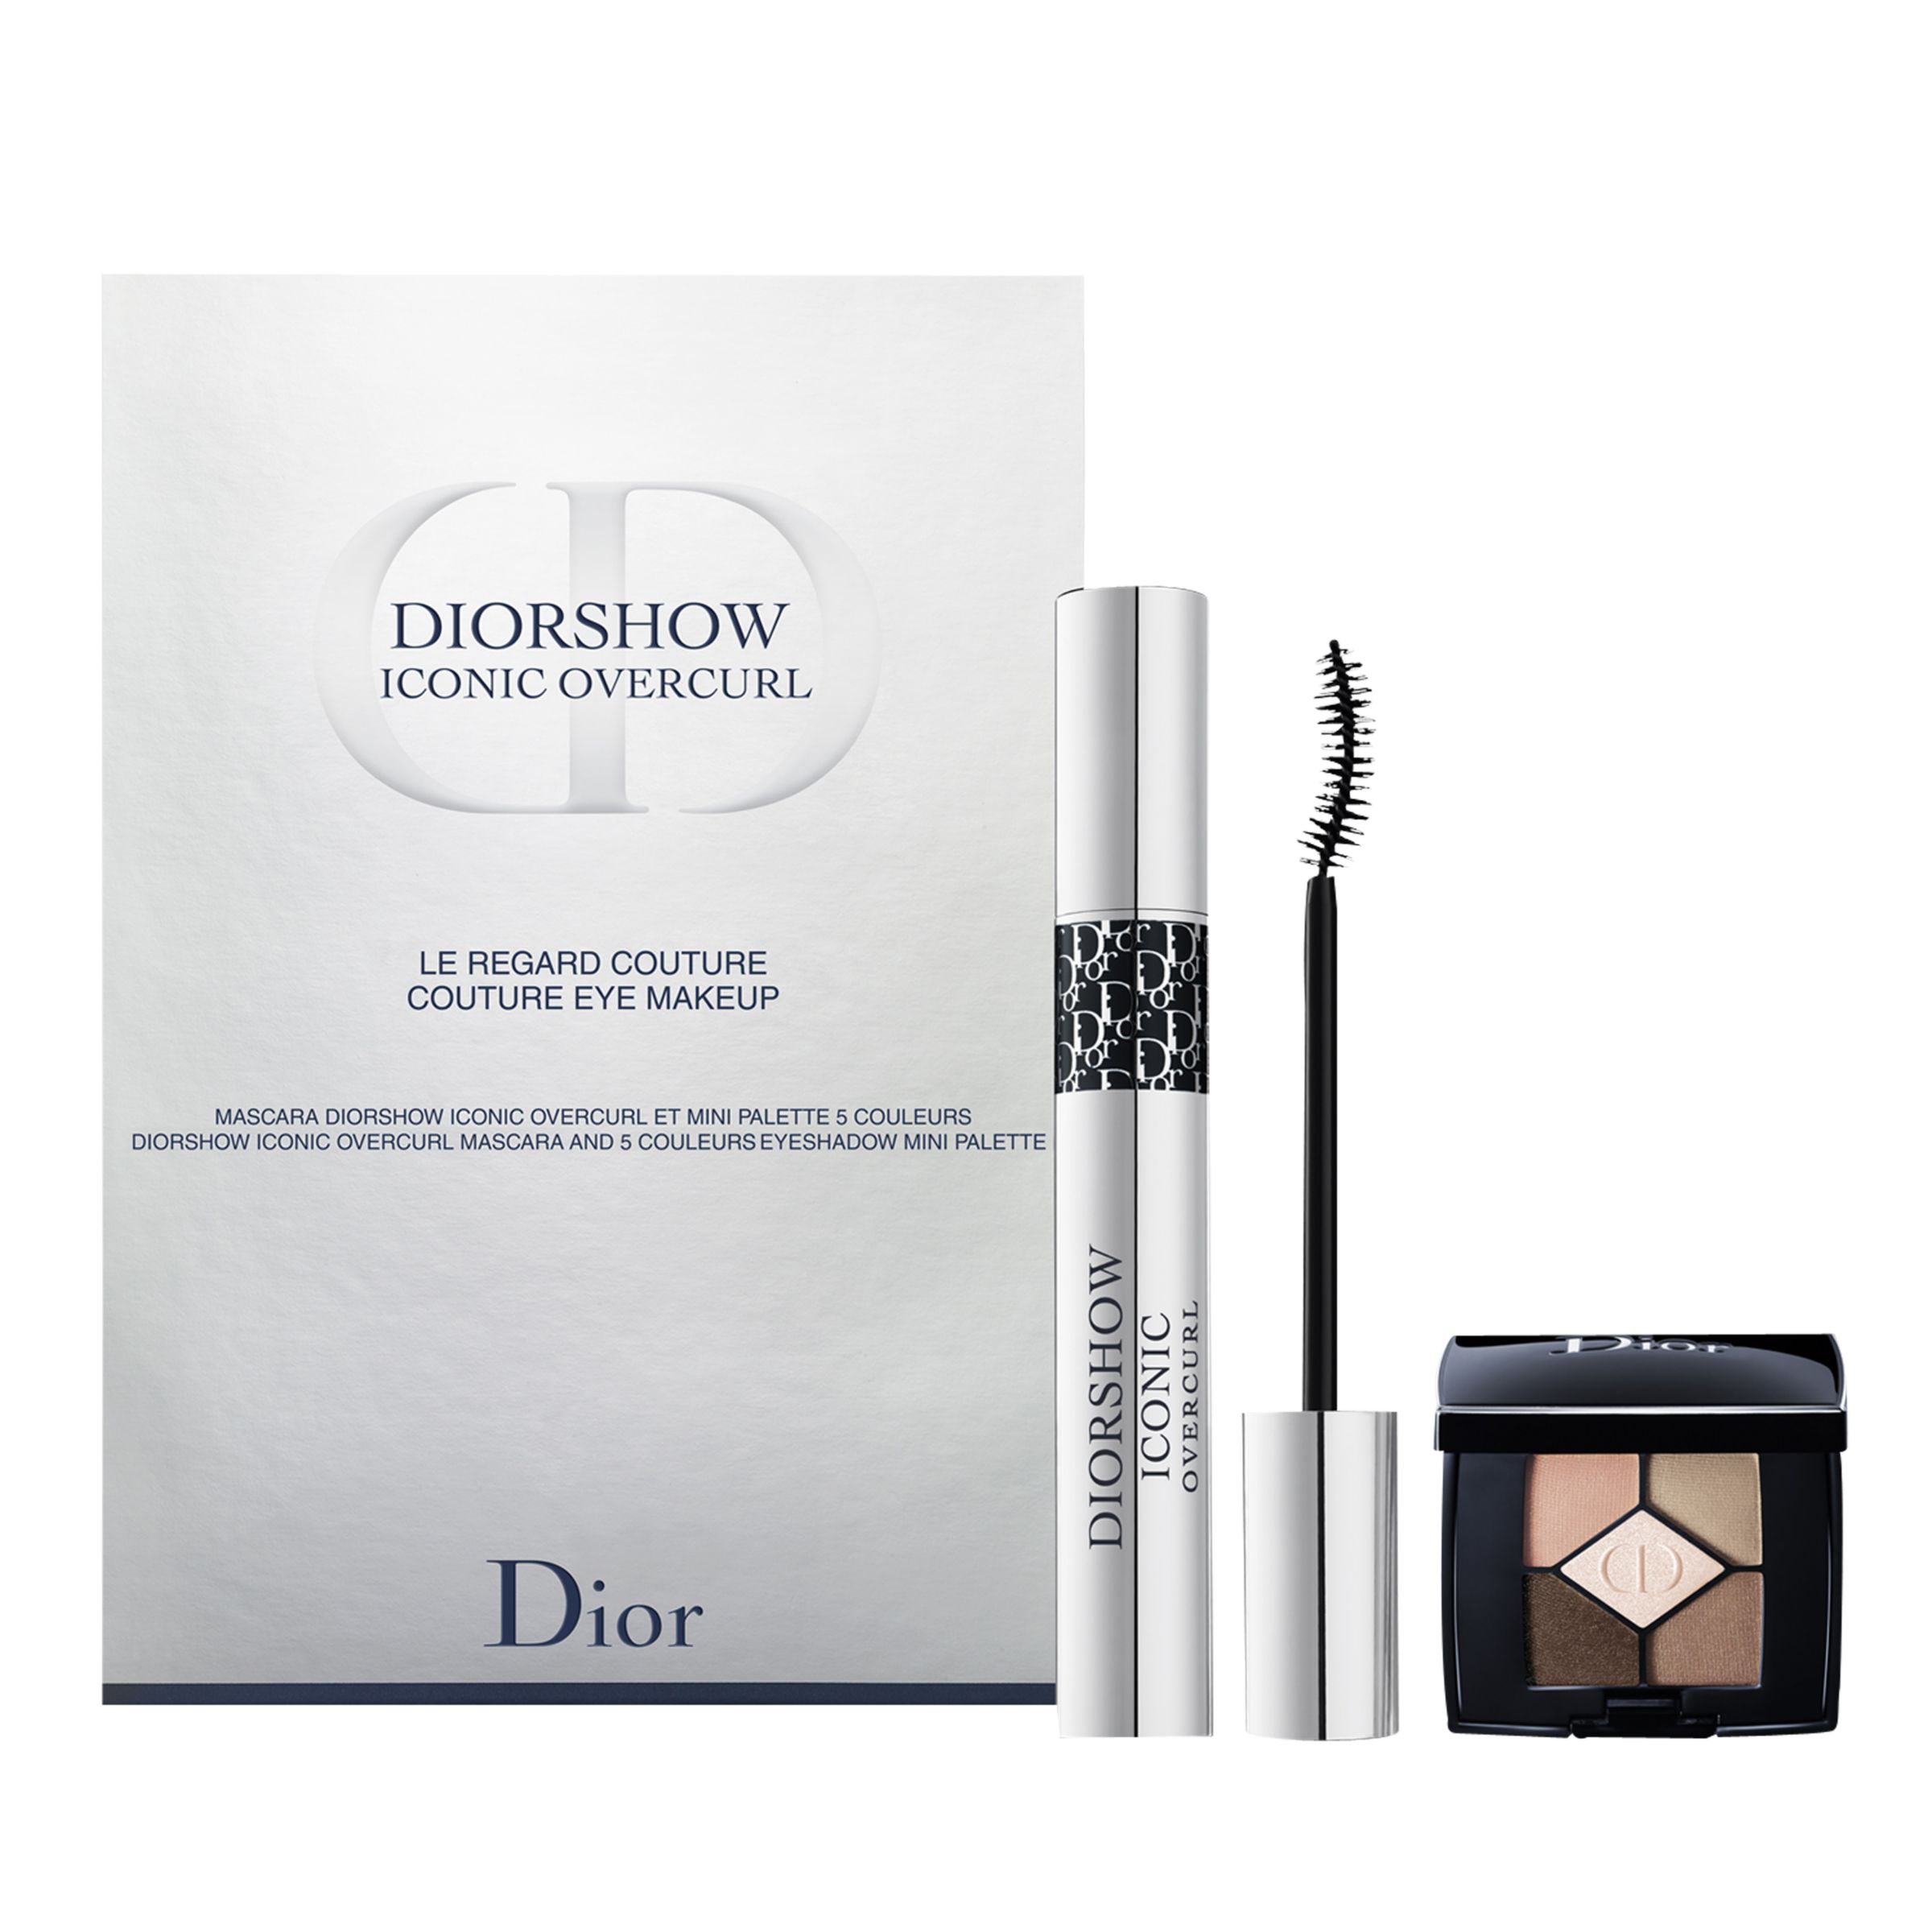 diorshow iconic overcurl mascara set